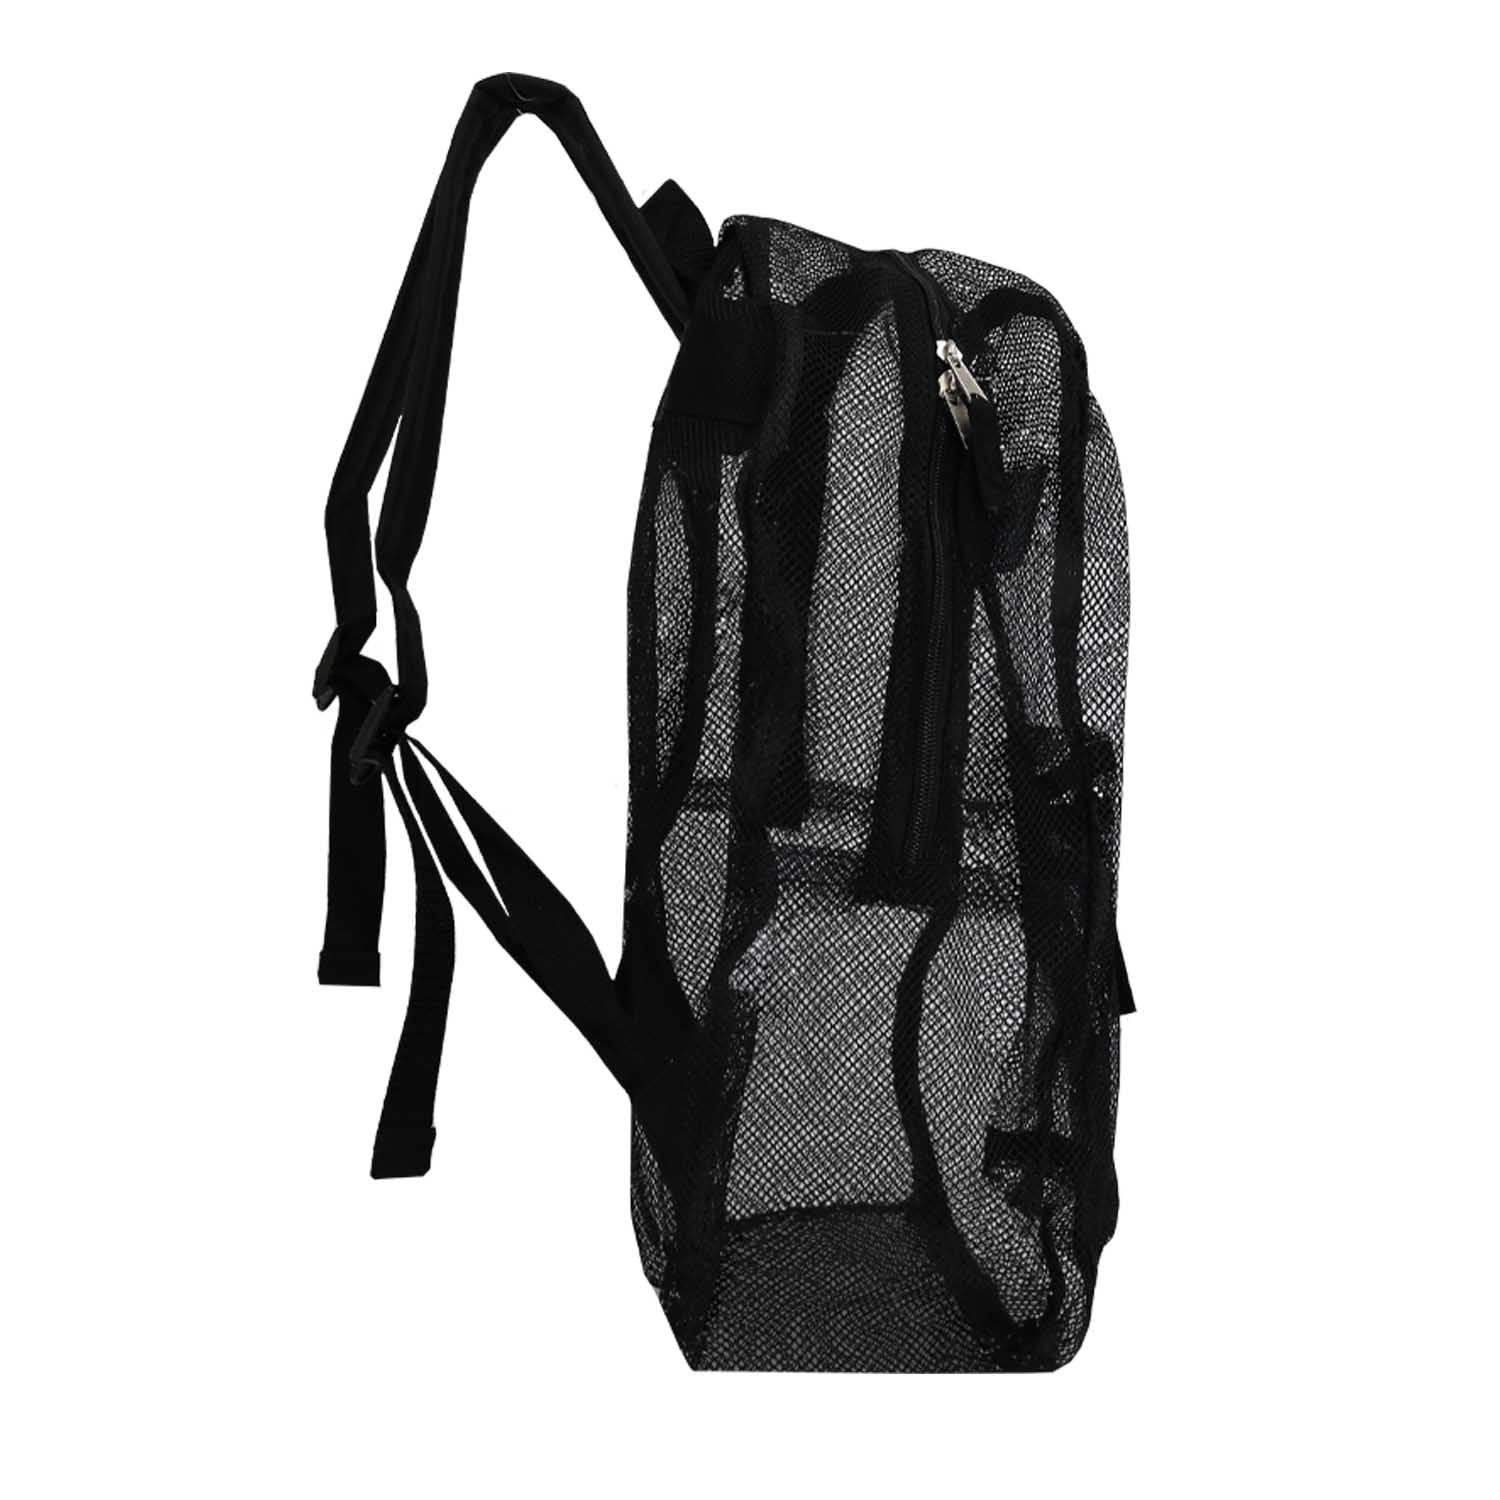 17" See Through Mesh Backpacks - Black -Wholesale Case of 24 Bookbags